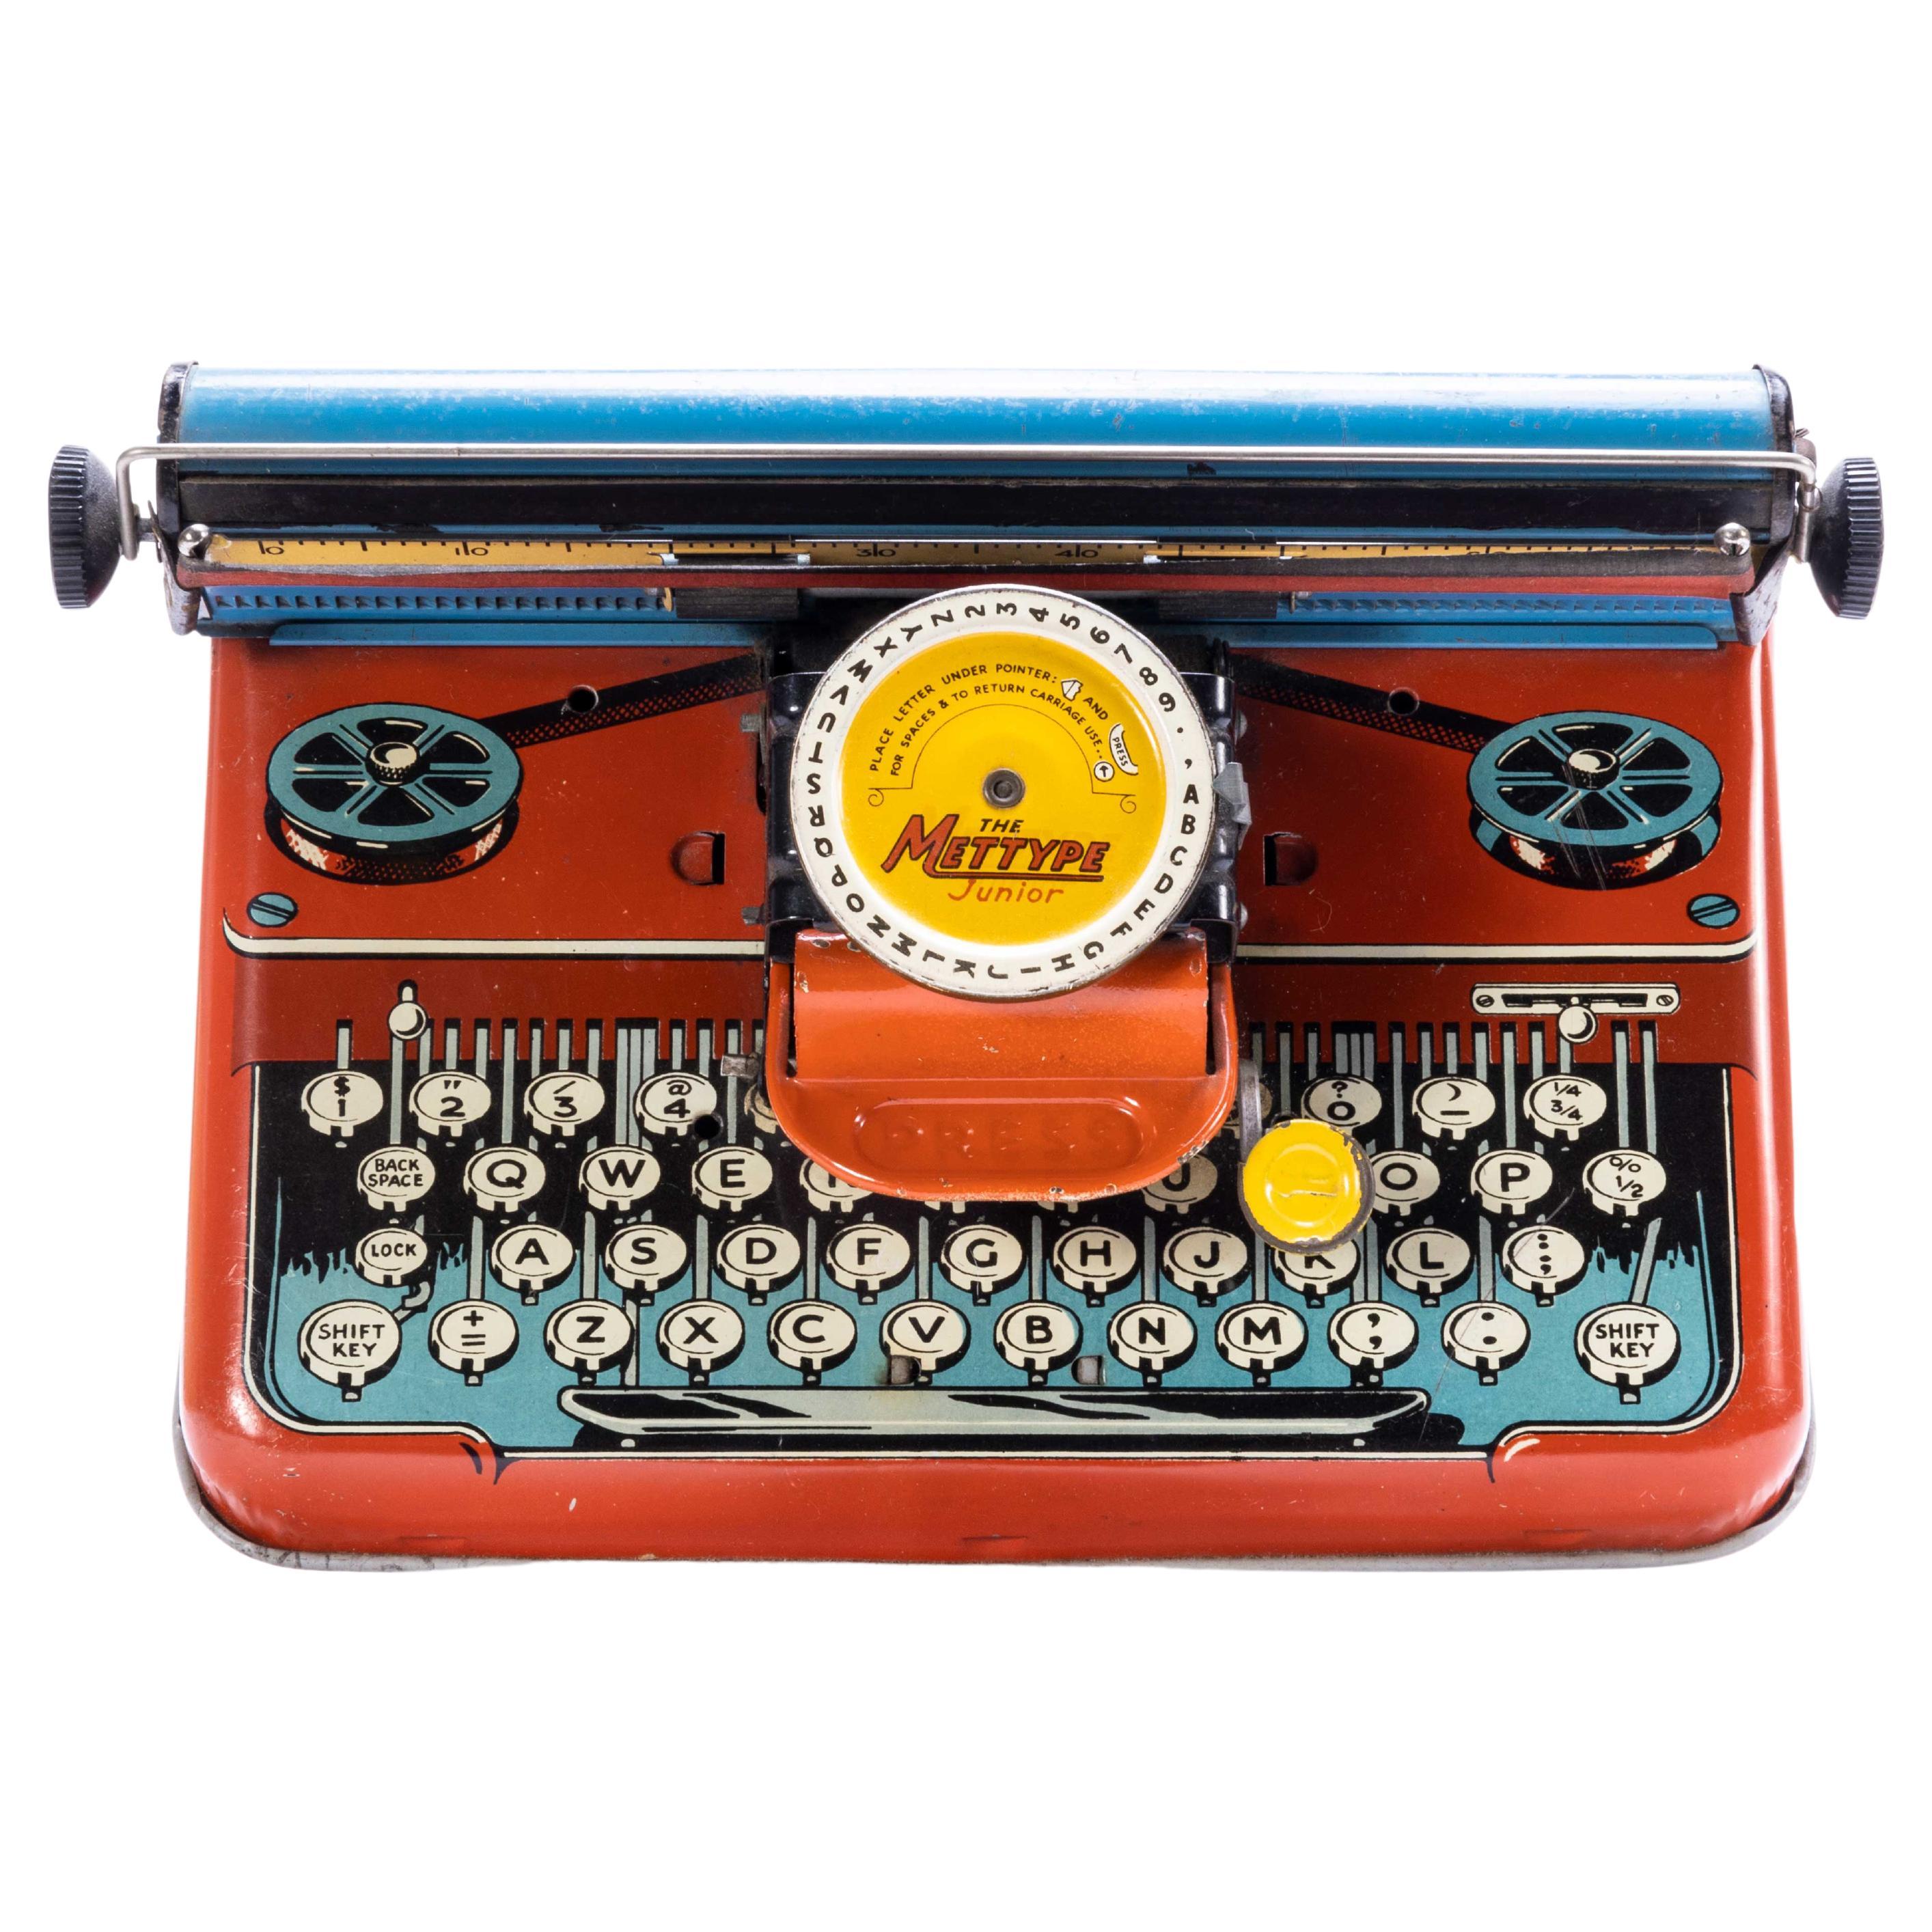 1950's Original Mettype Typewriter - Boxed For Sale